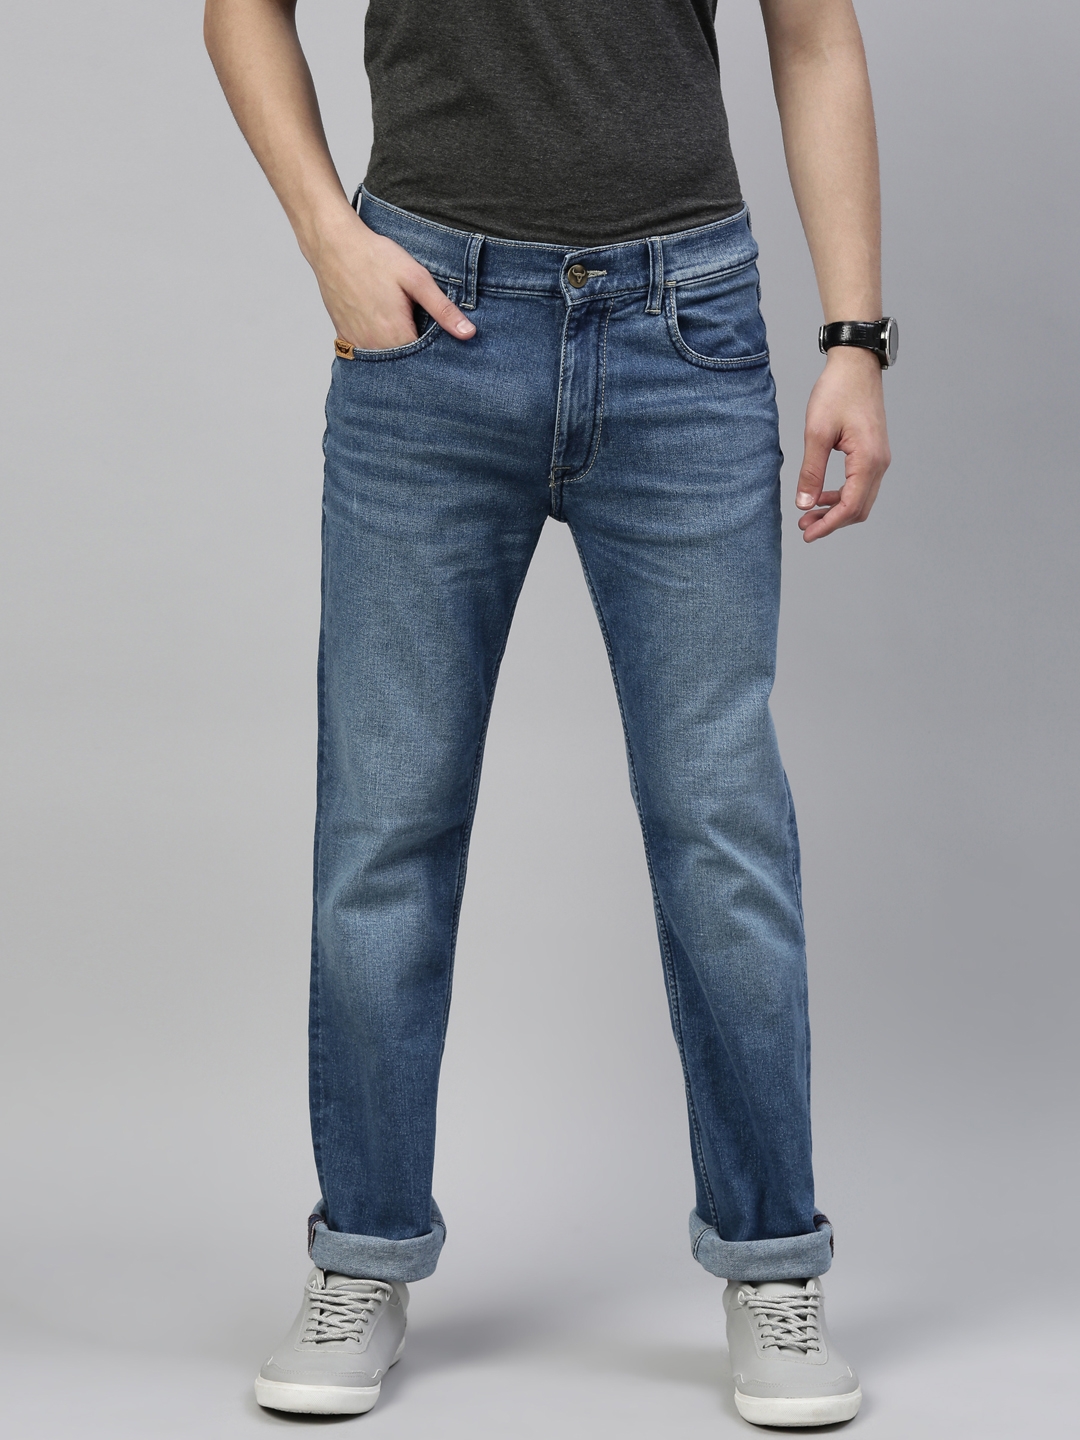 American Bull | American Bull Mens LT.Blue Denim Jeans